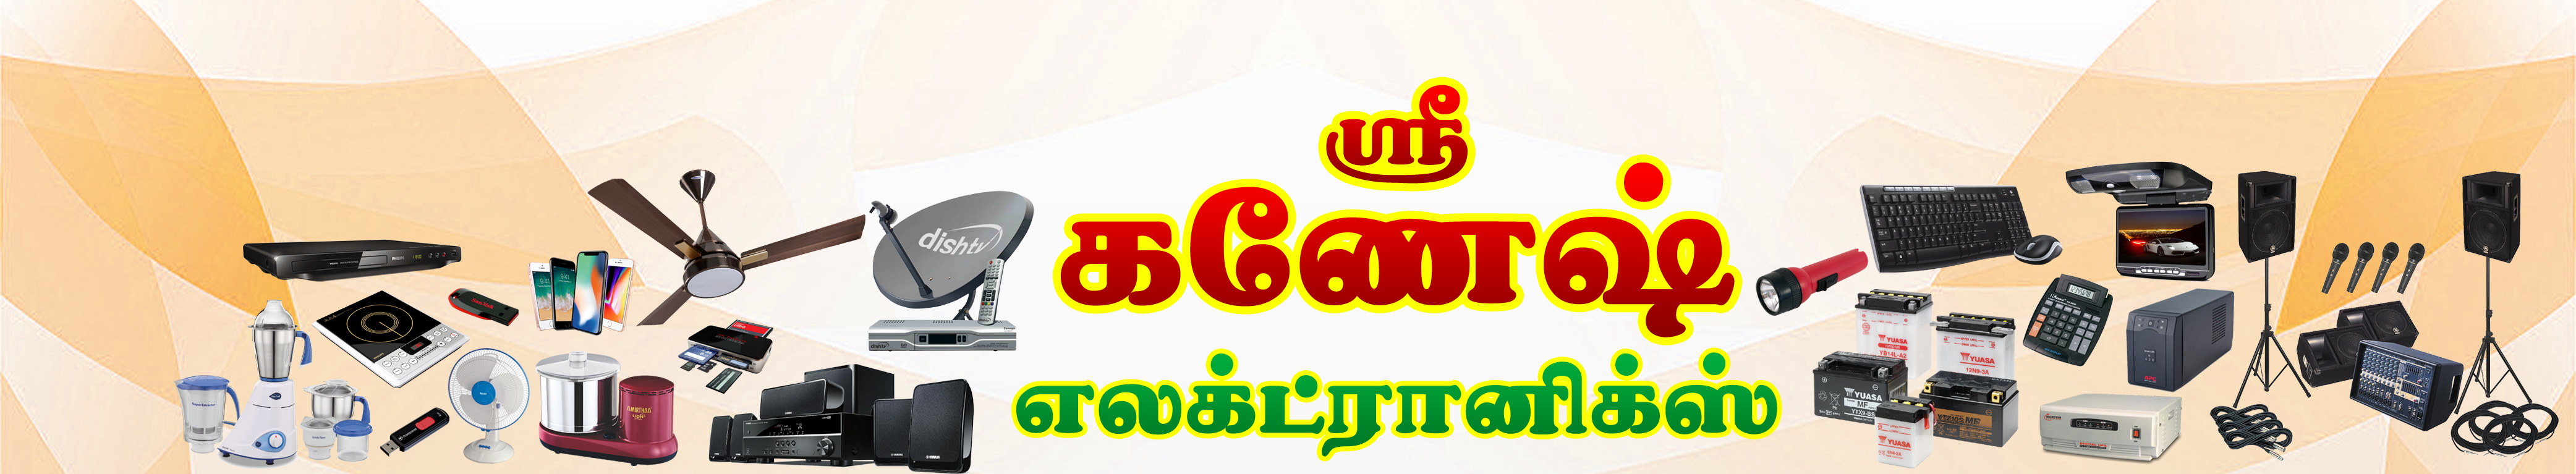 SRI GANESH ELECTRONICS Banner Image